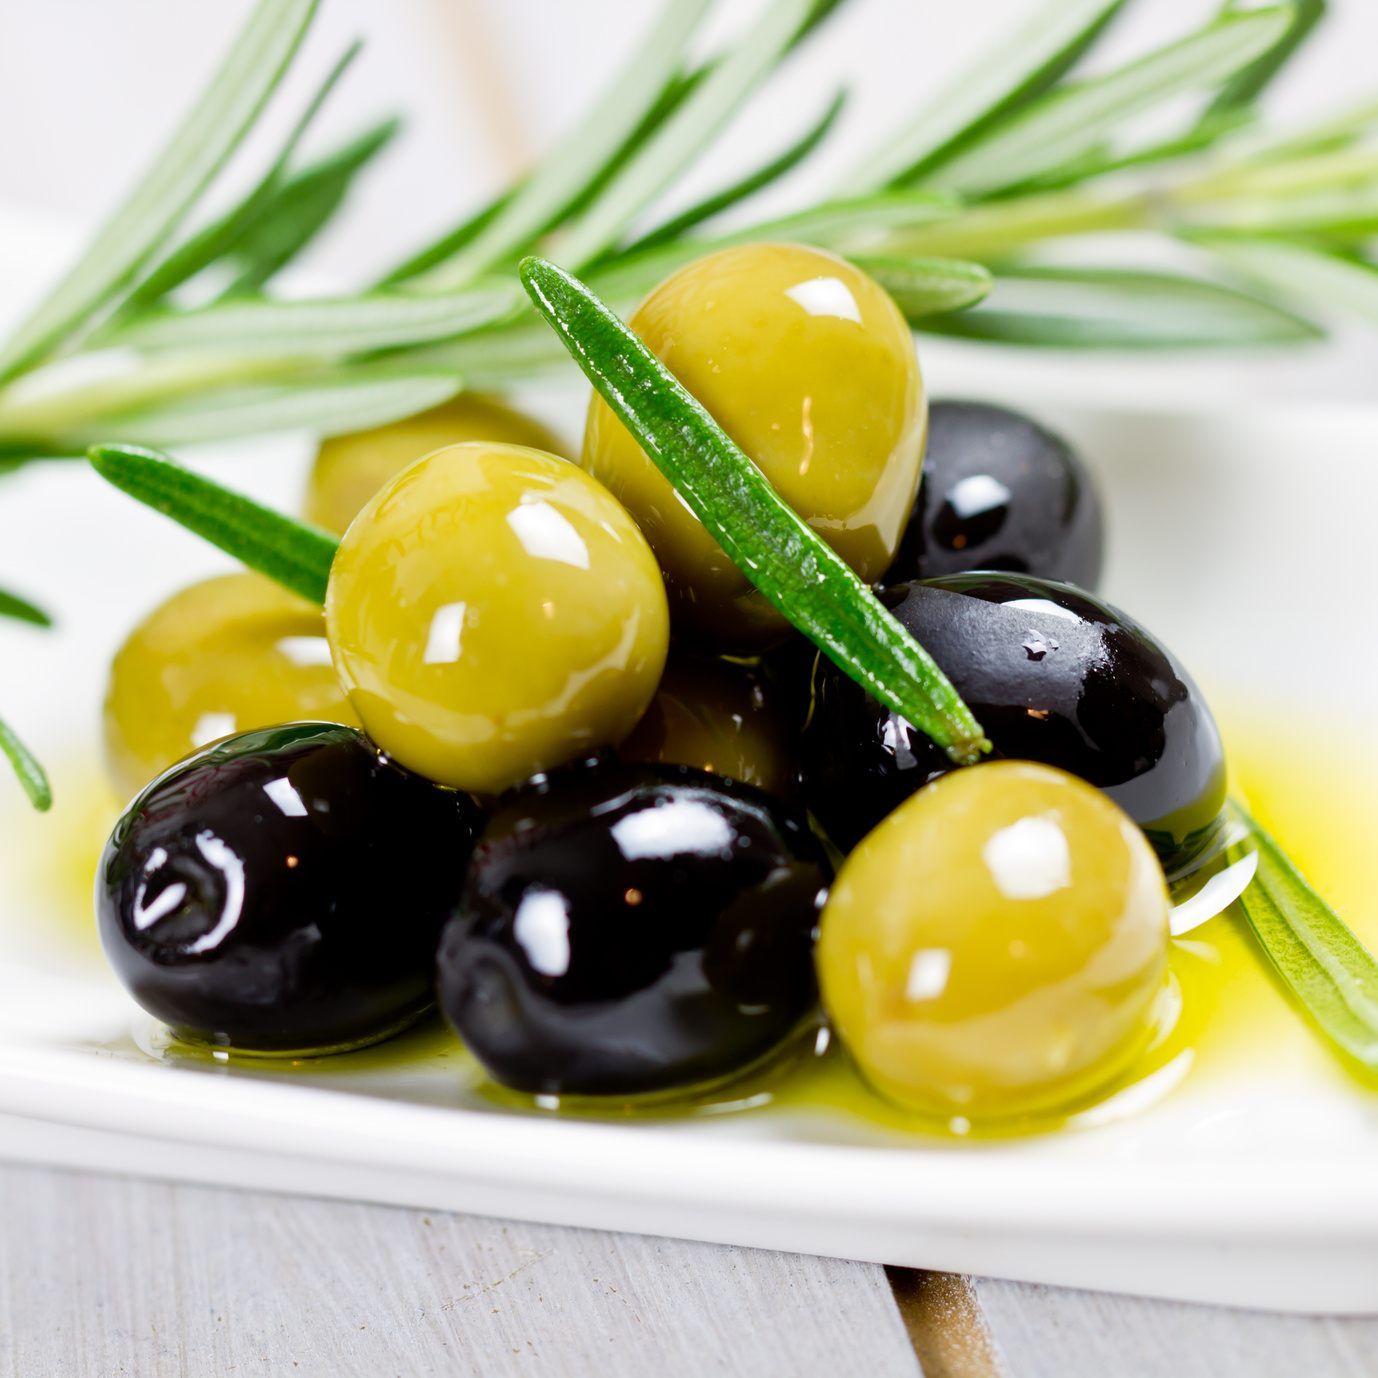 Podróże kulinarne: Podróż za jedną oliwkę